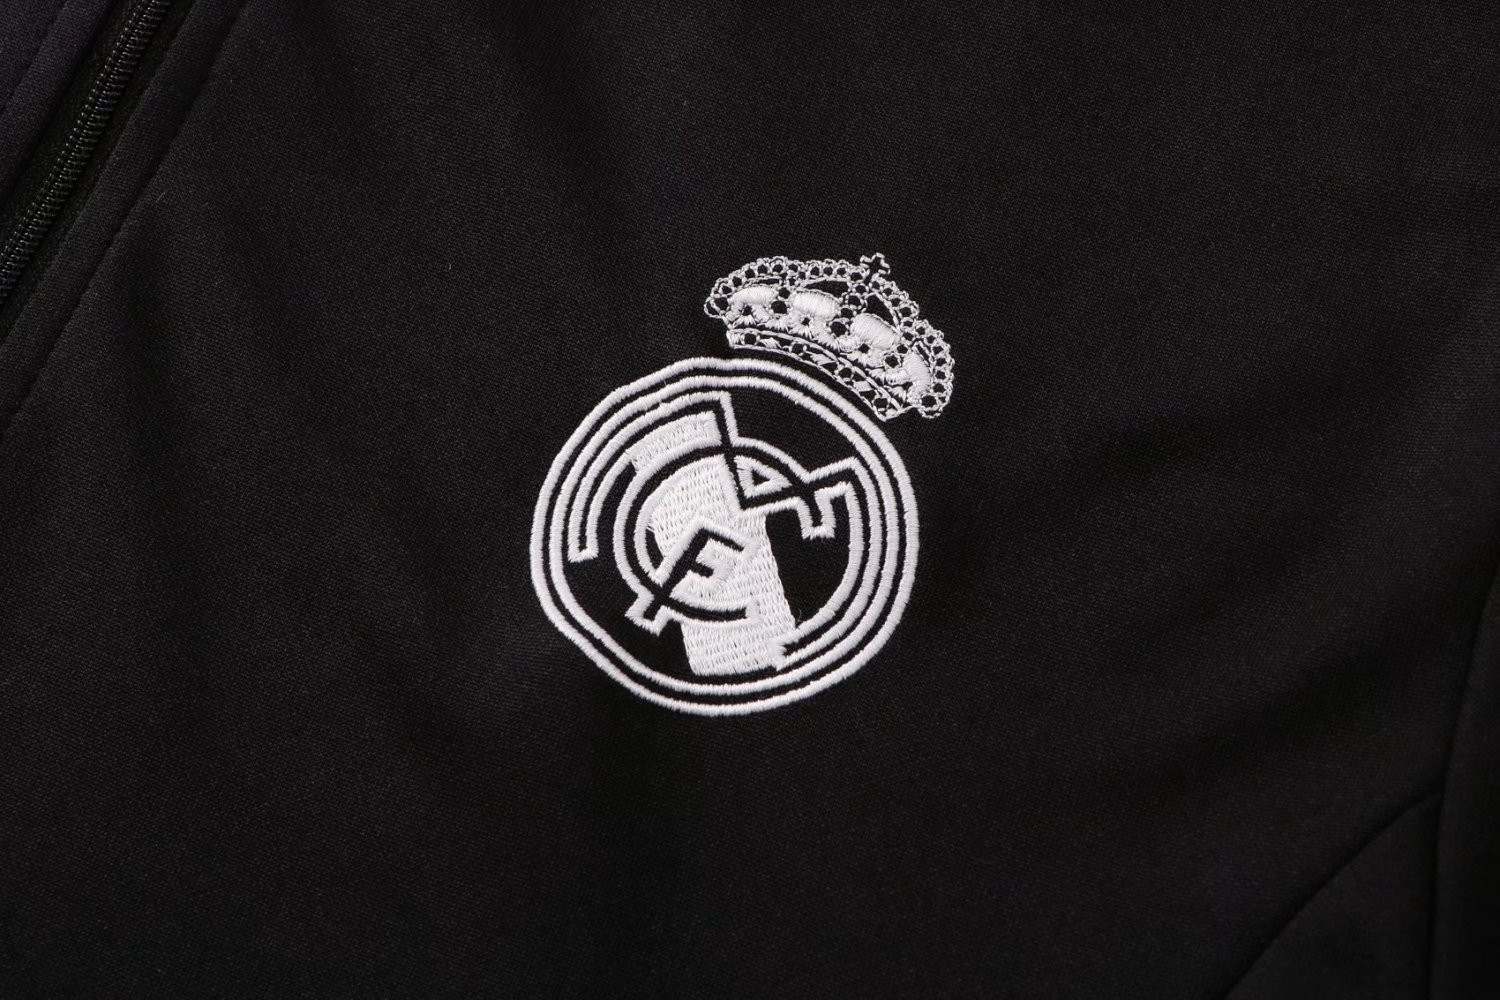 Real Madrid Soccer Training Suit Black Mens 2022/23